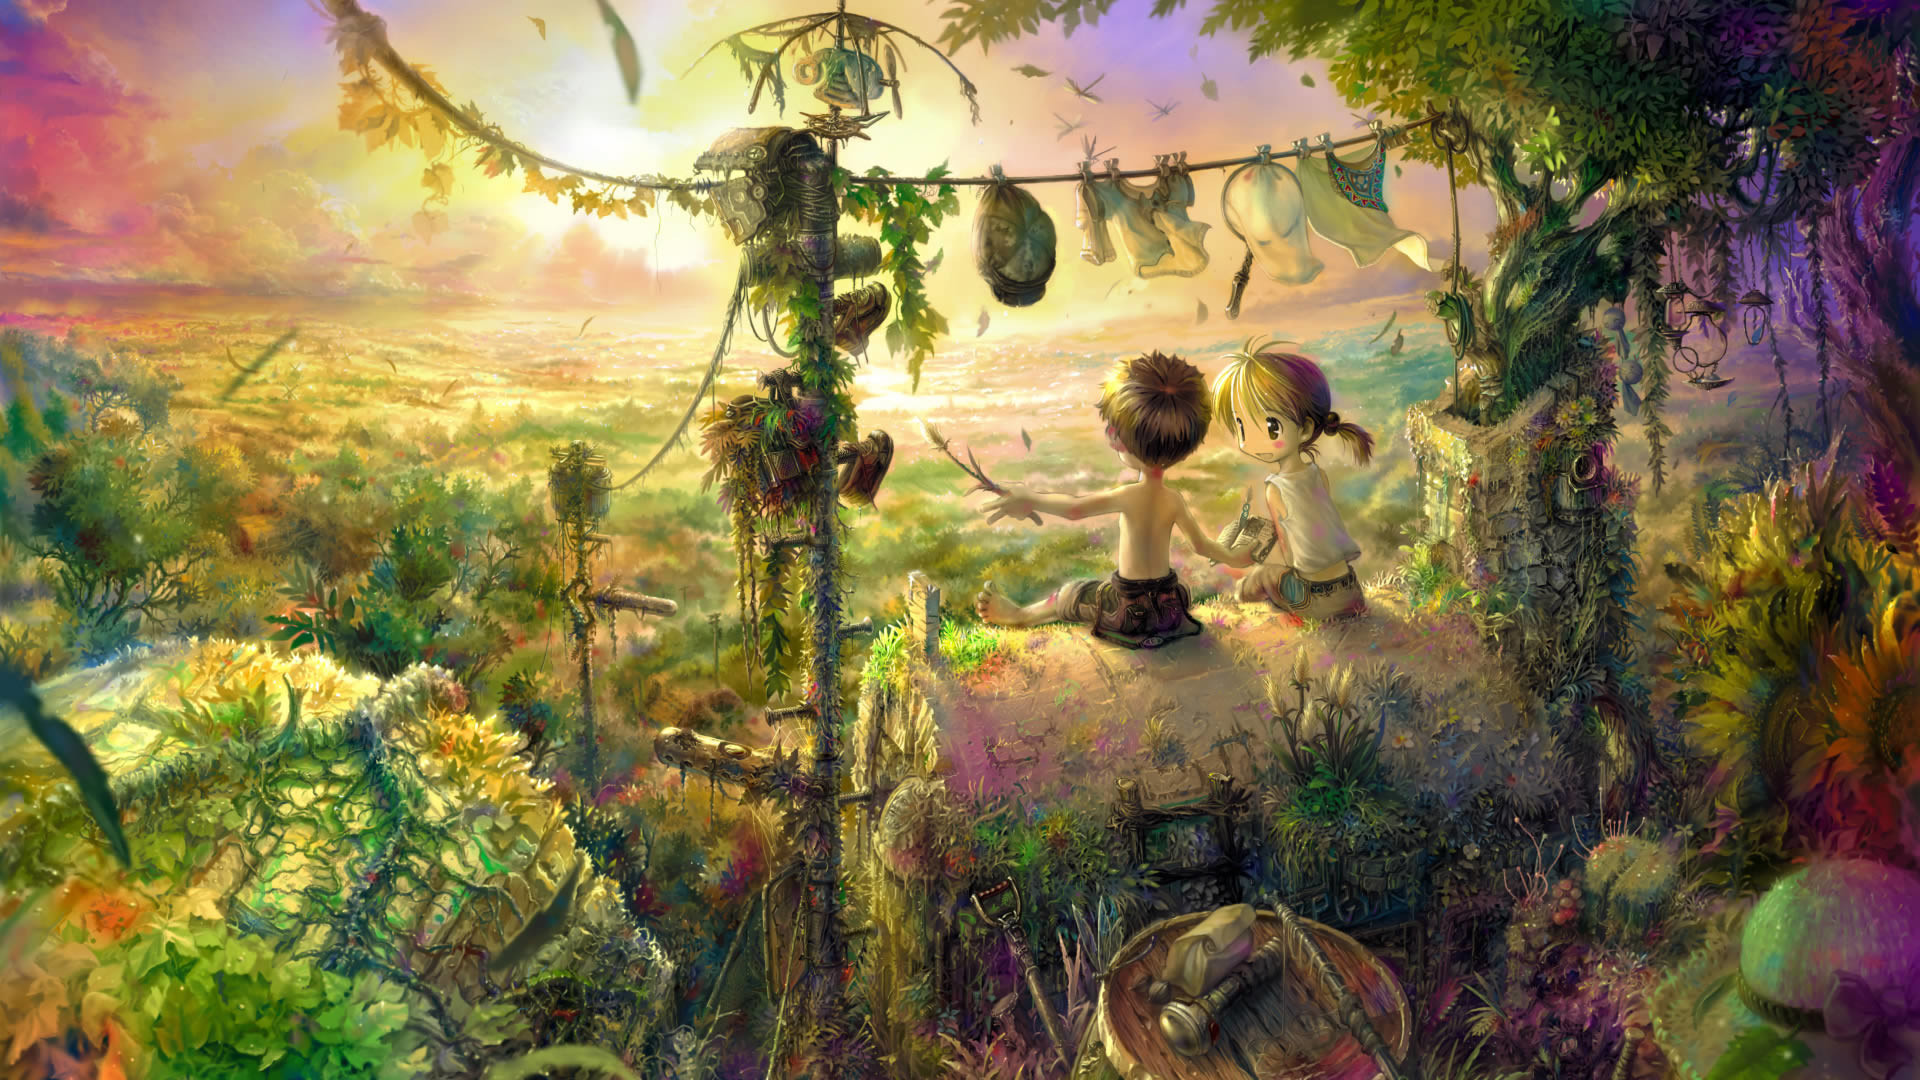 1920x1080 Anime Fantasy Kids HD Desktop Wallpaper, Background Image